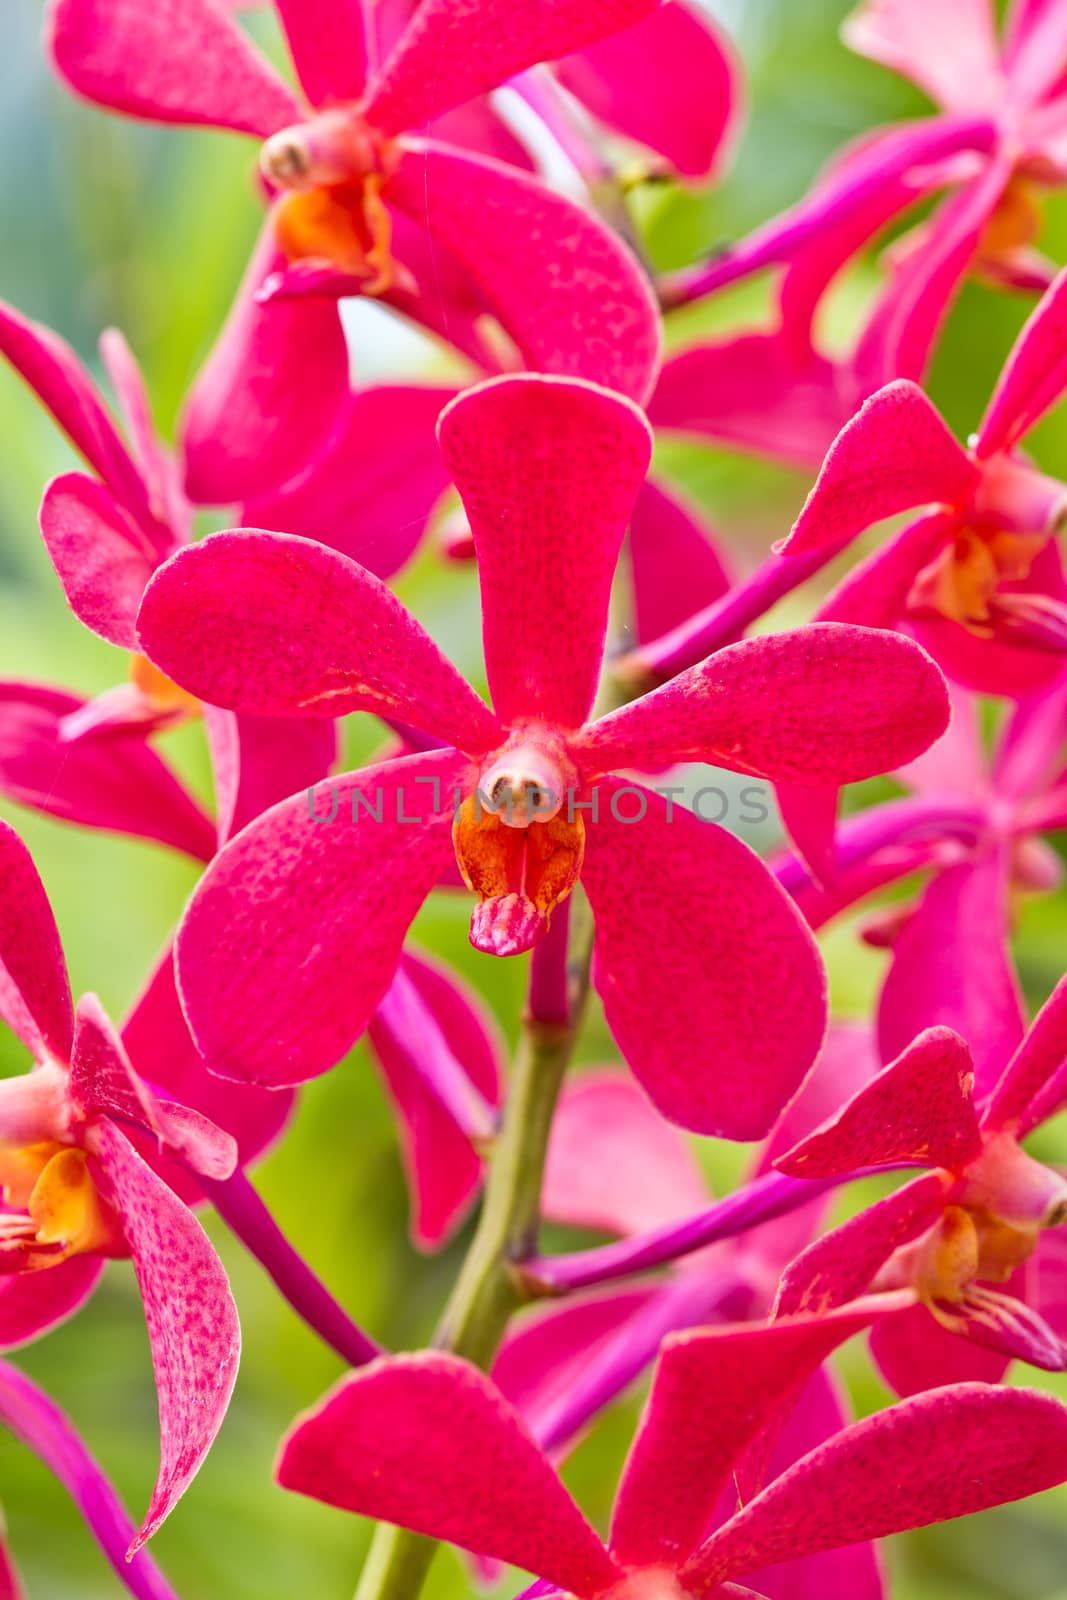 Blossom red vanda orchids in the garden.